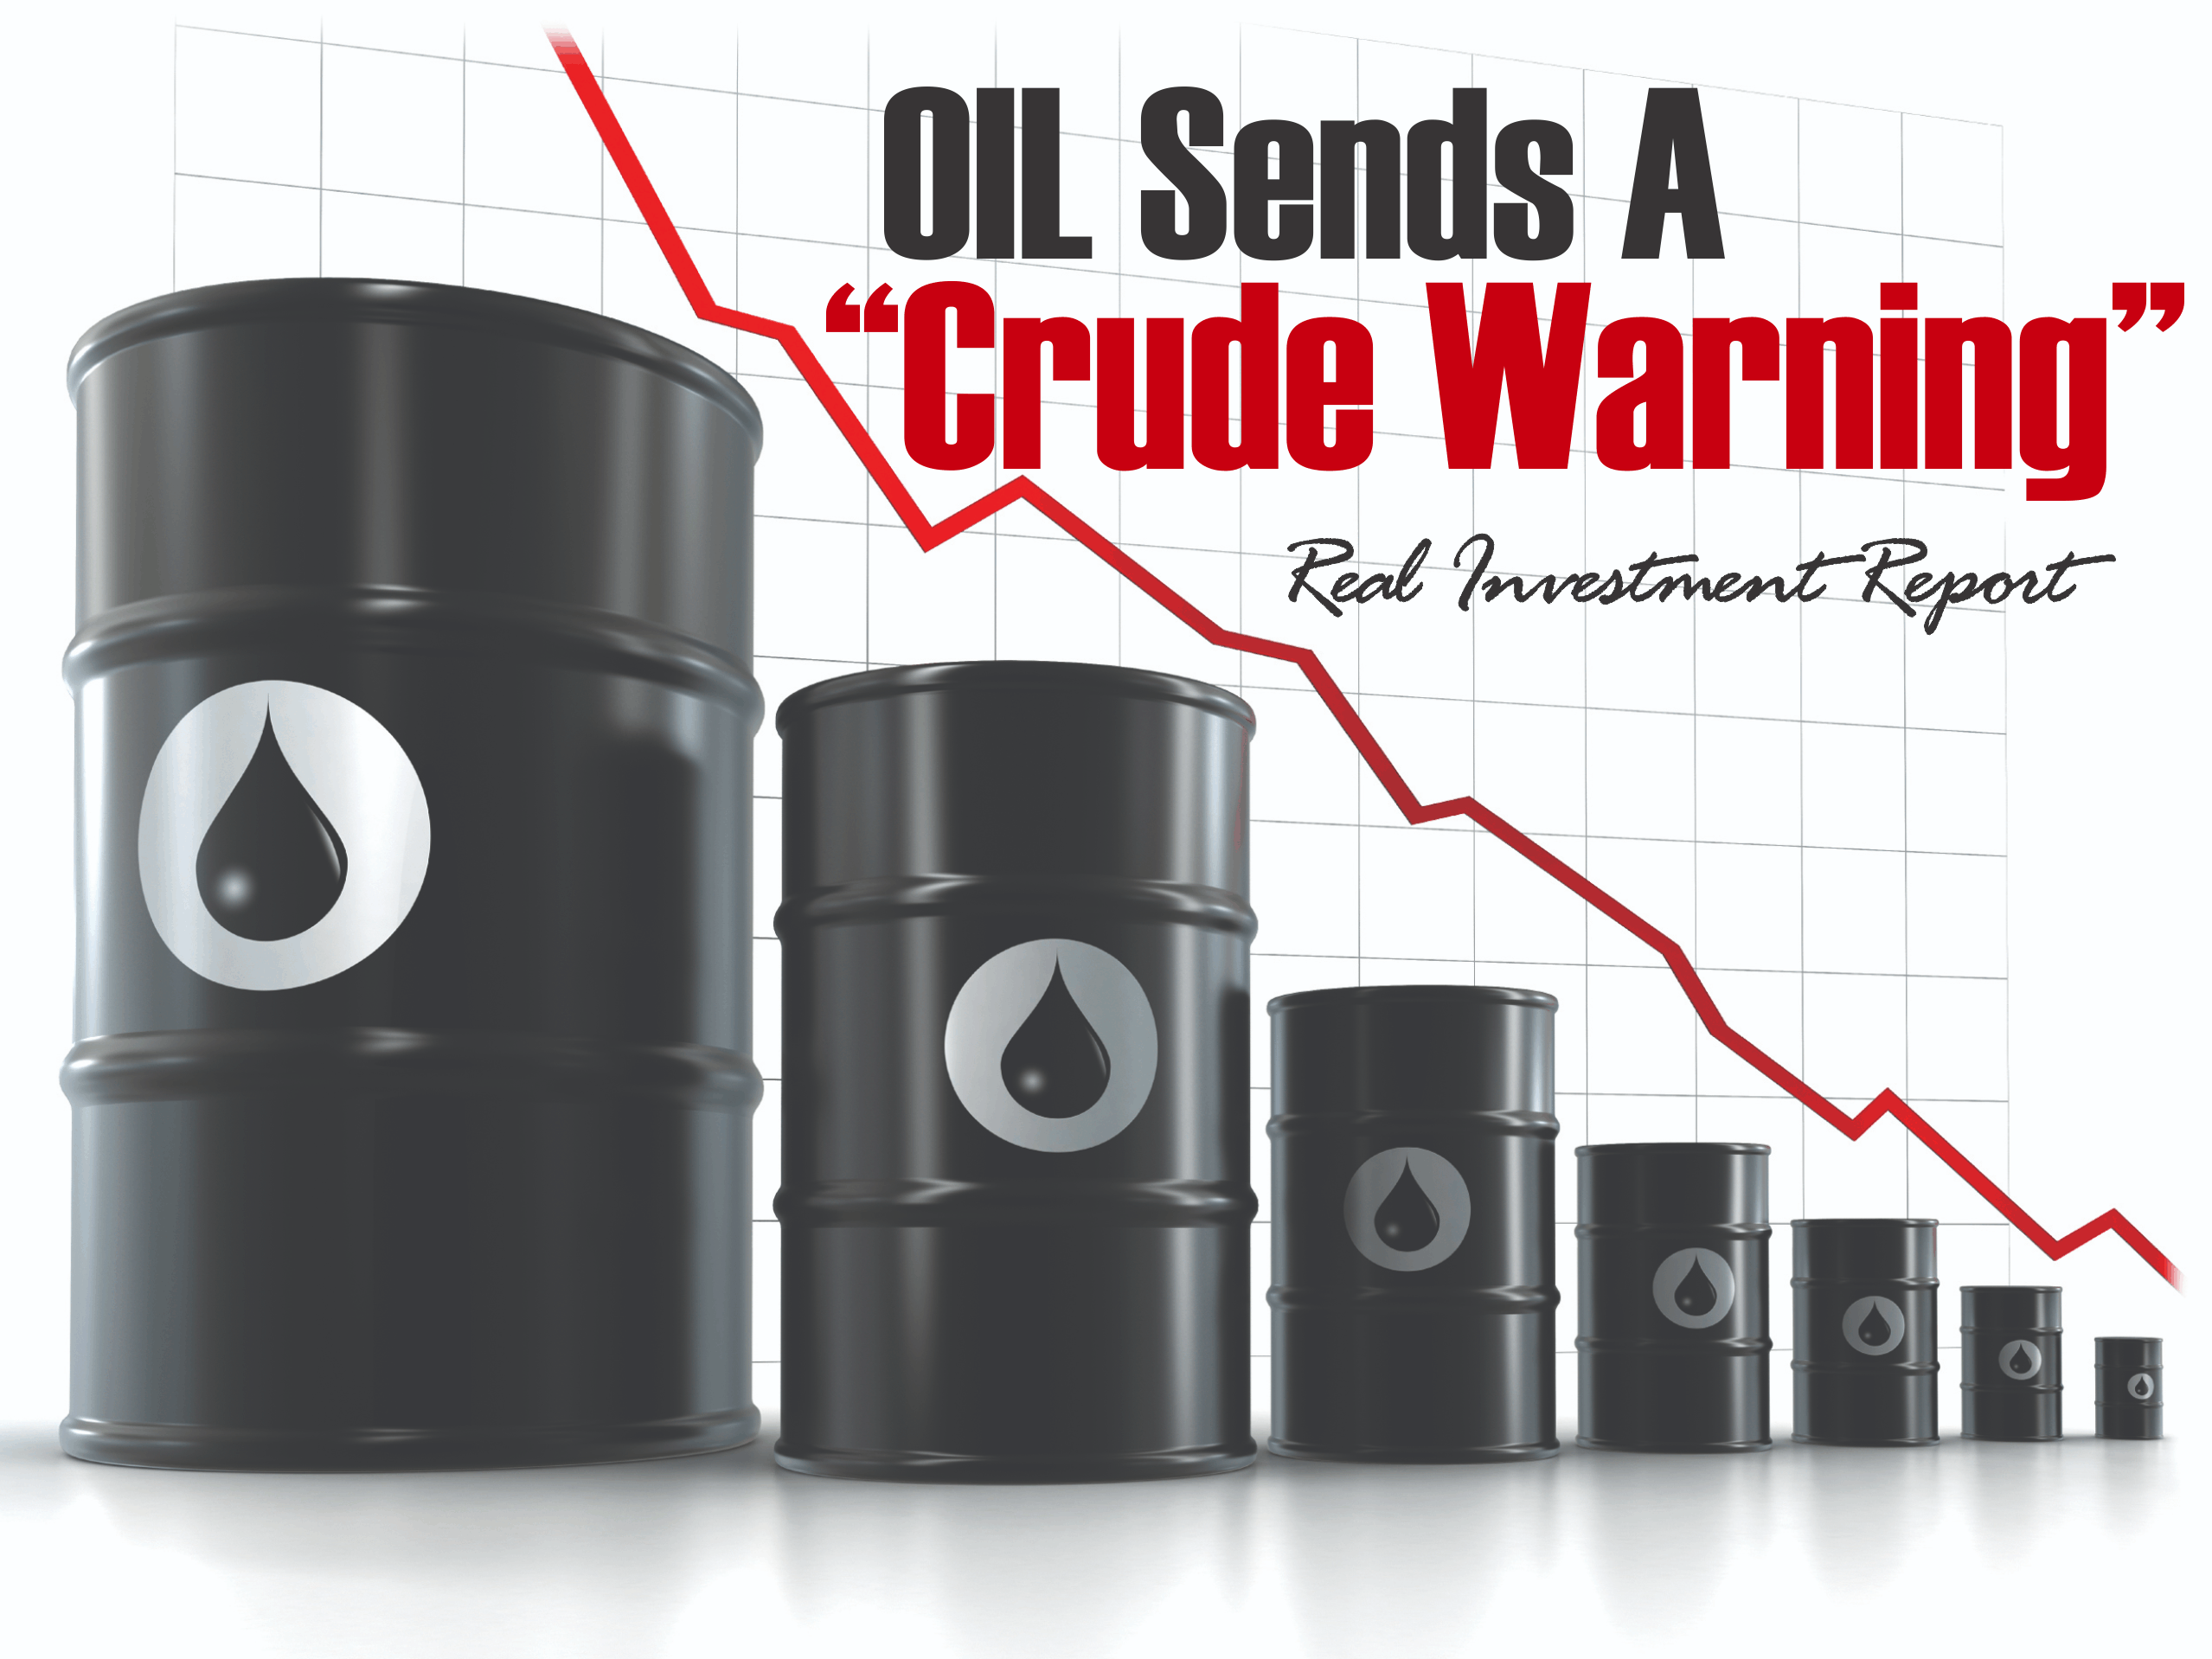 Oil Sends A “Crude Warning”